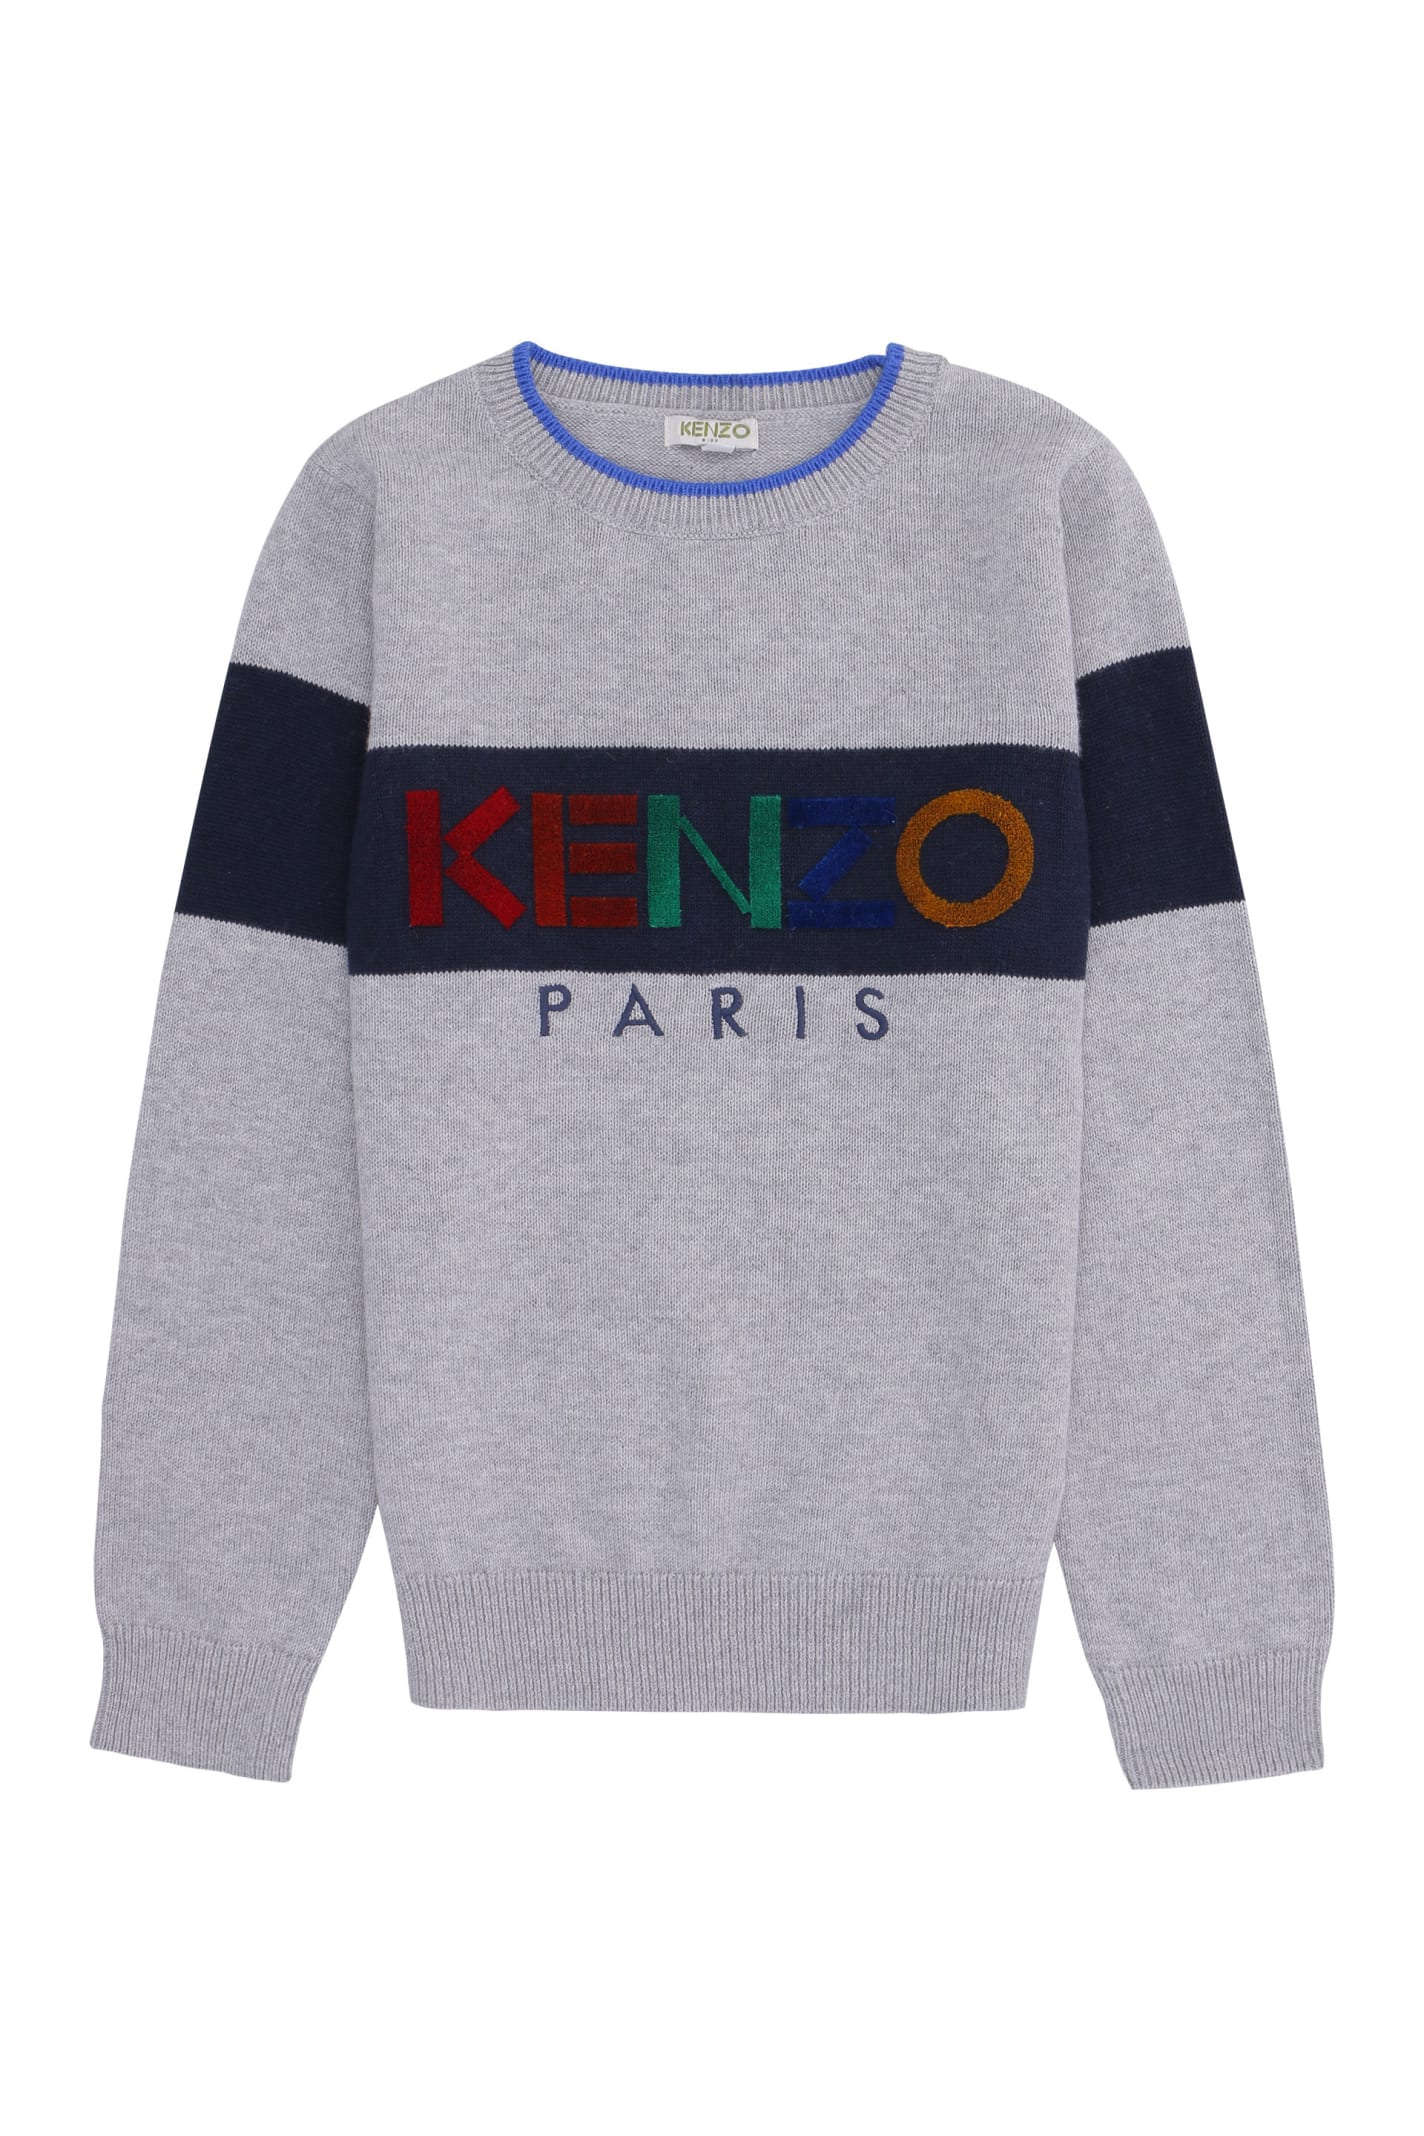 Kenzo Kids Cotton-cashmere Blend Crew-neck Pullover